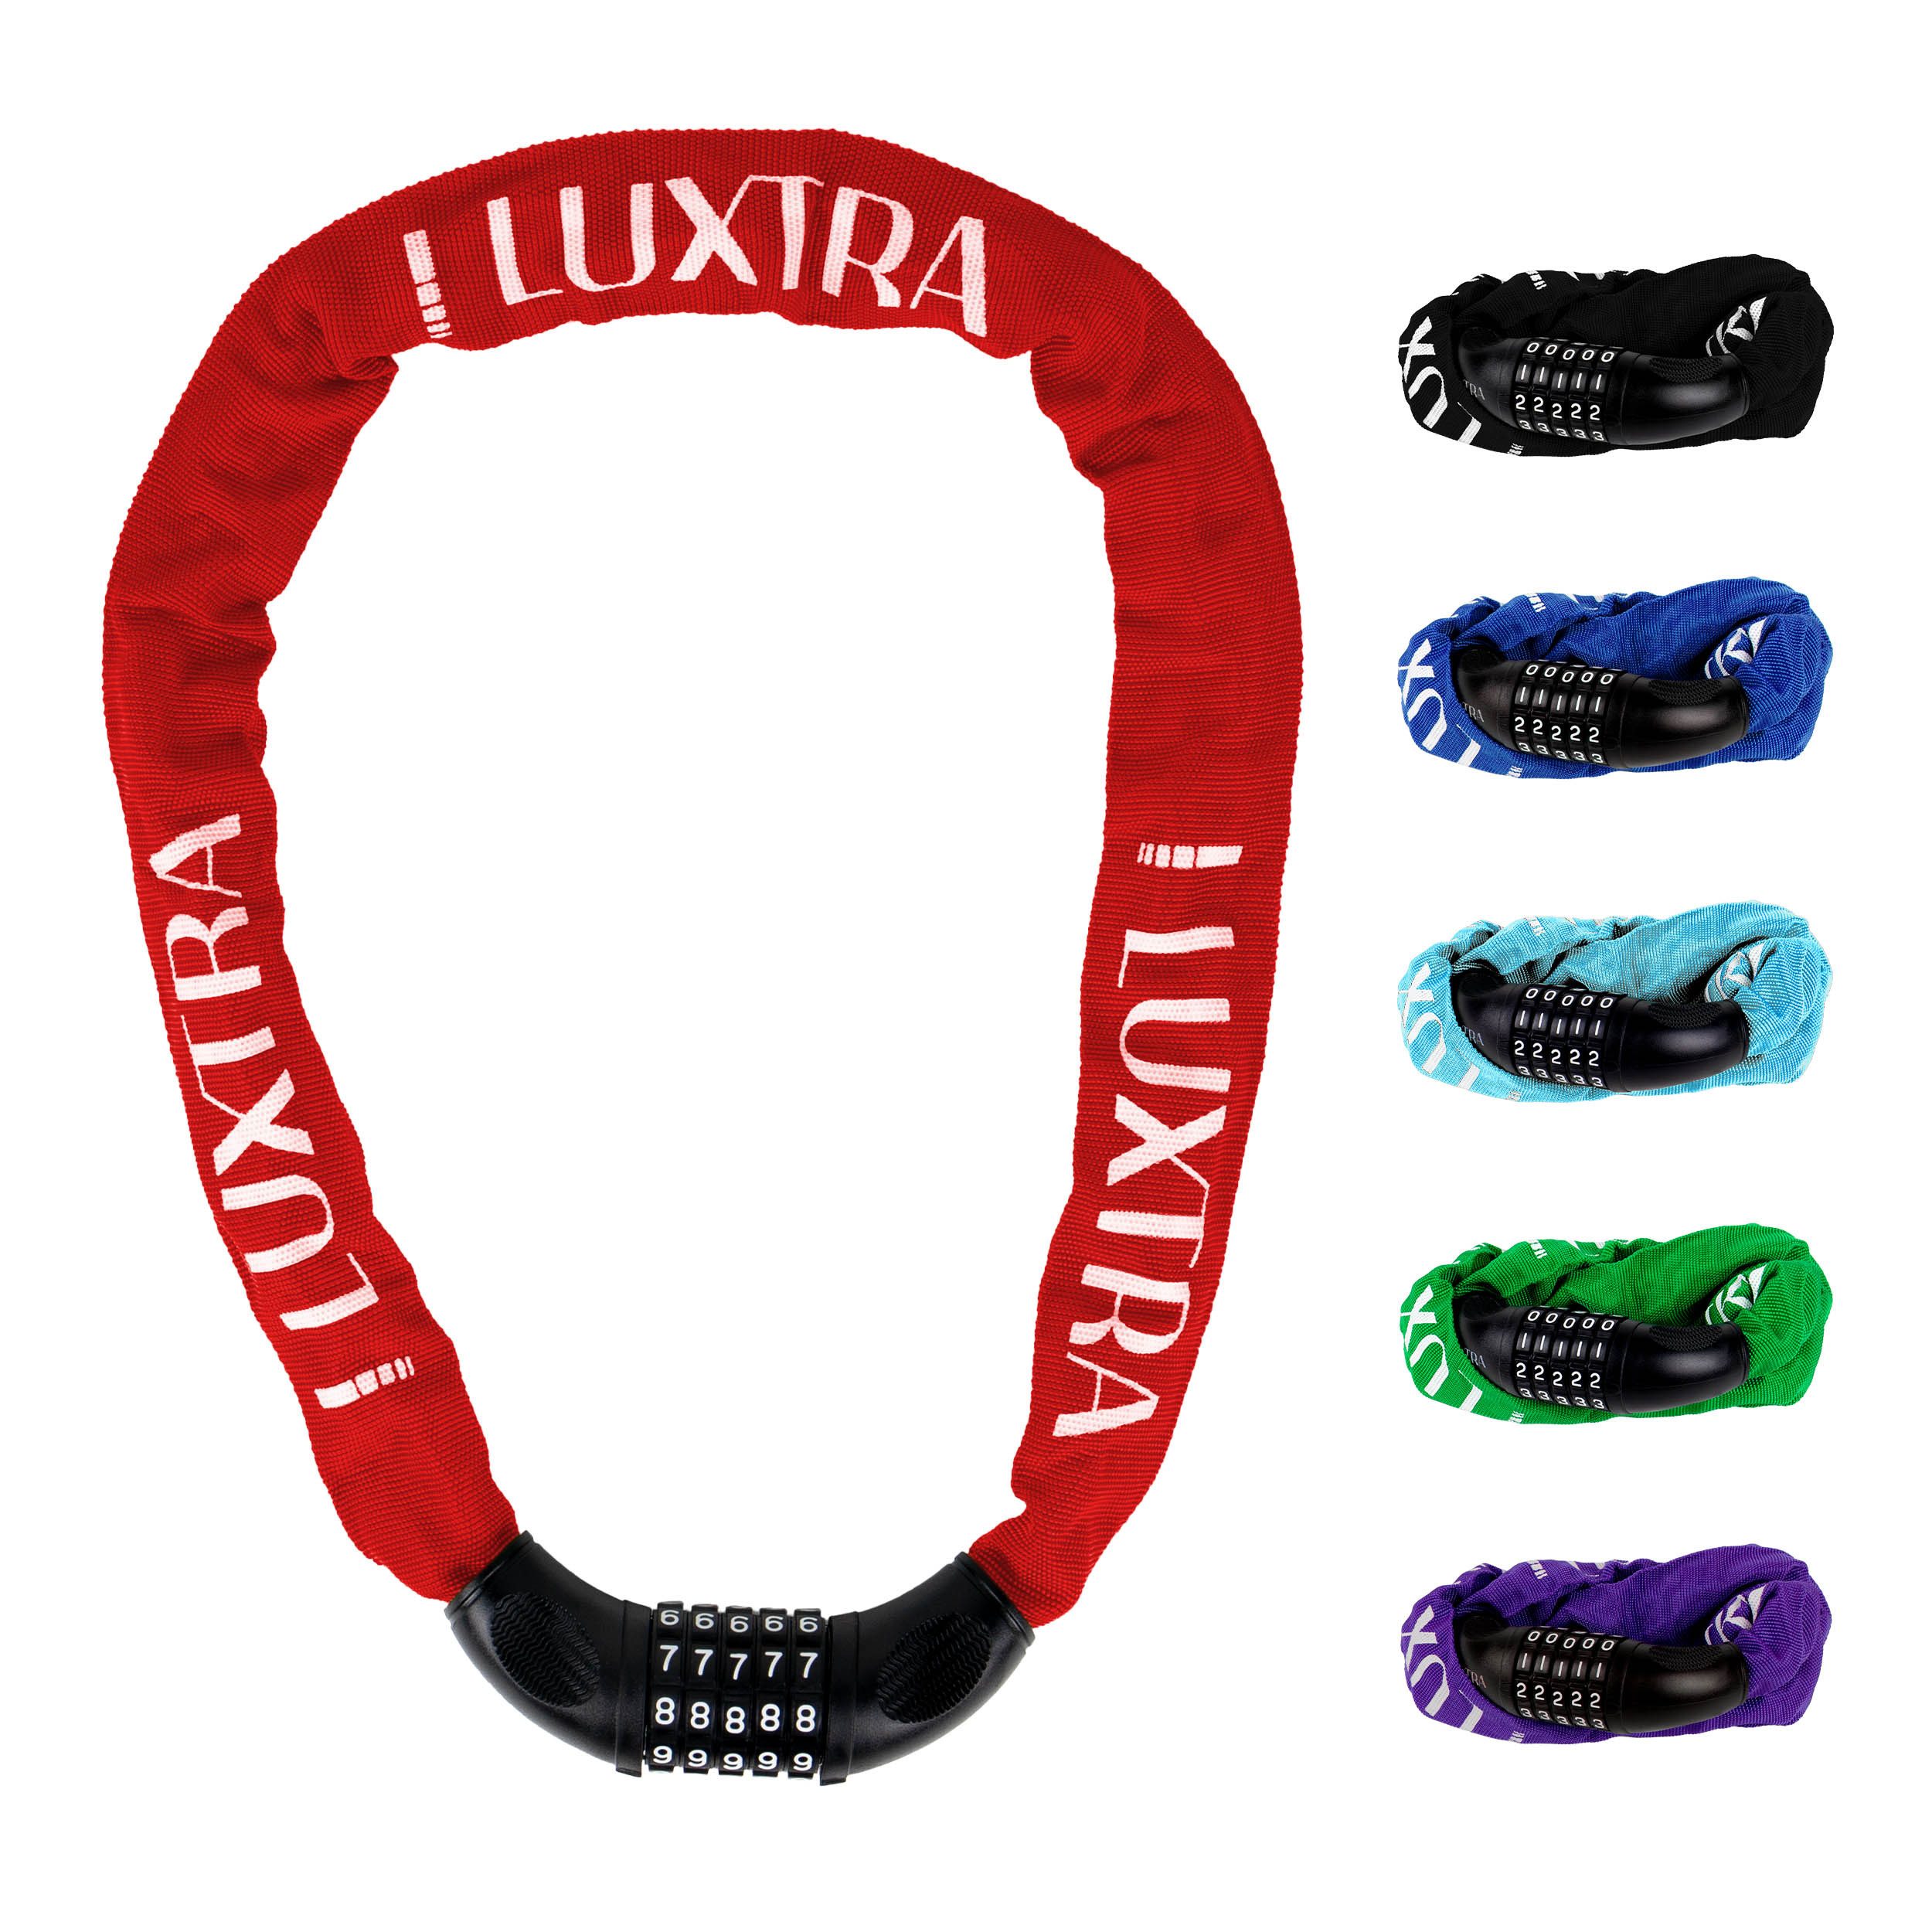 Luxtra Zahlenkettenschloss Fahrradschloss Zahlenkettenschloss mit Sicherheitscode, Rot, UV-beständige Nylonhülle